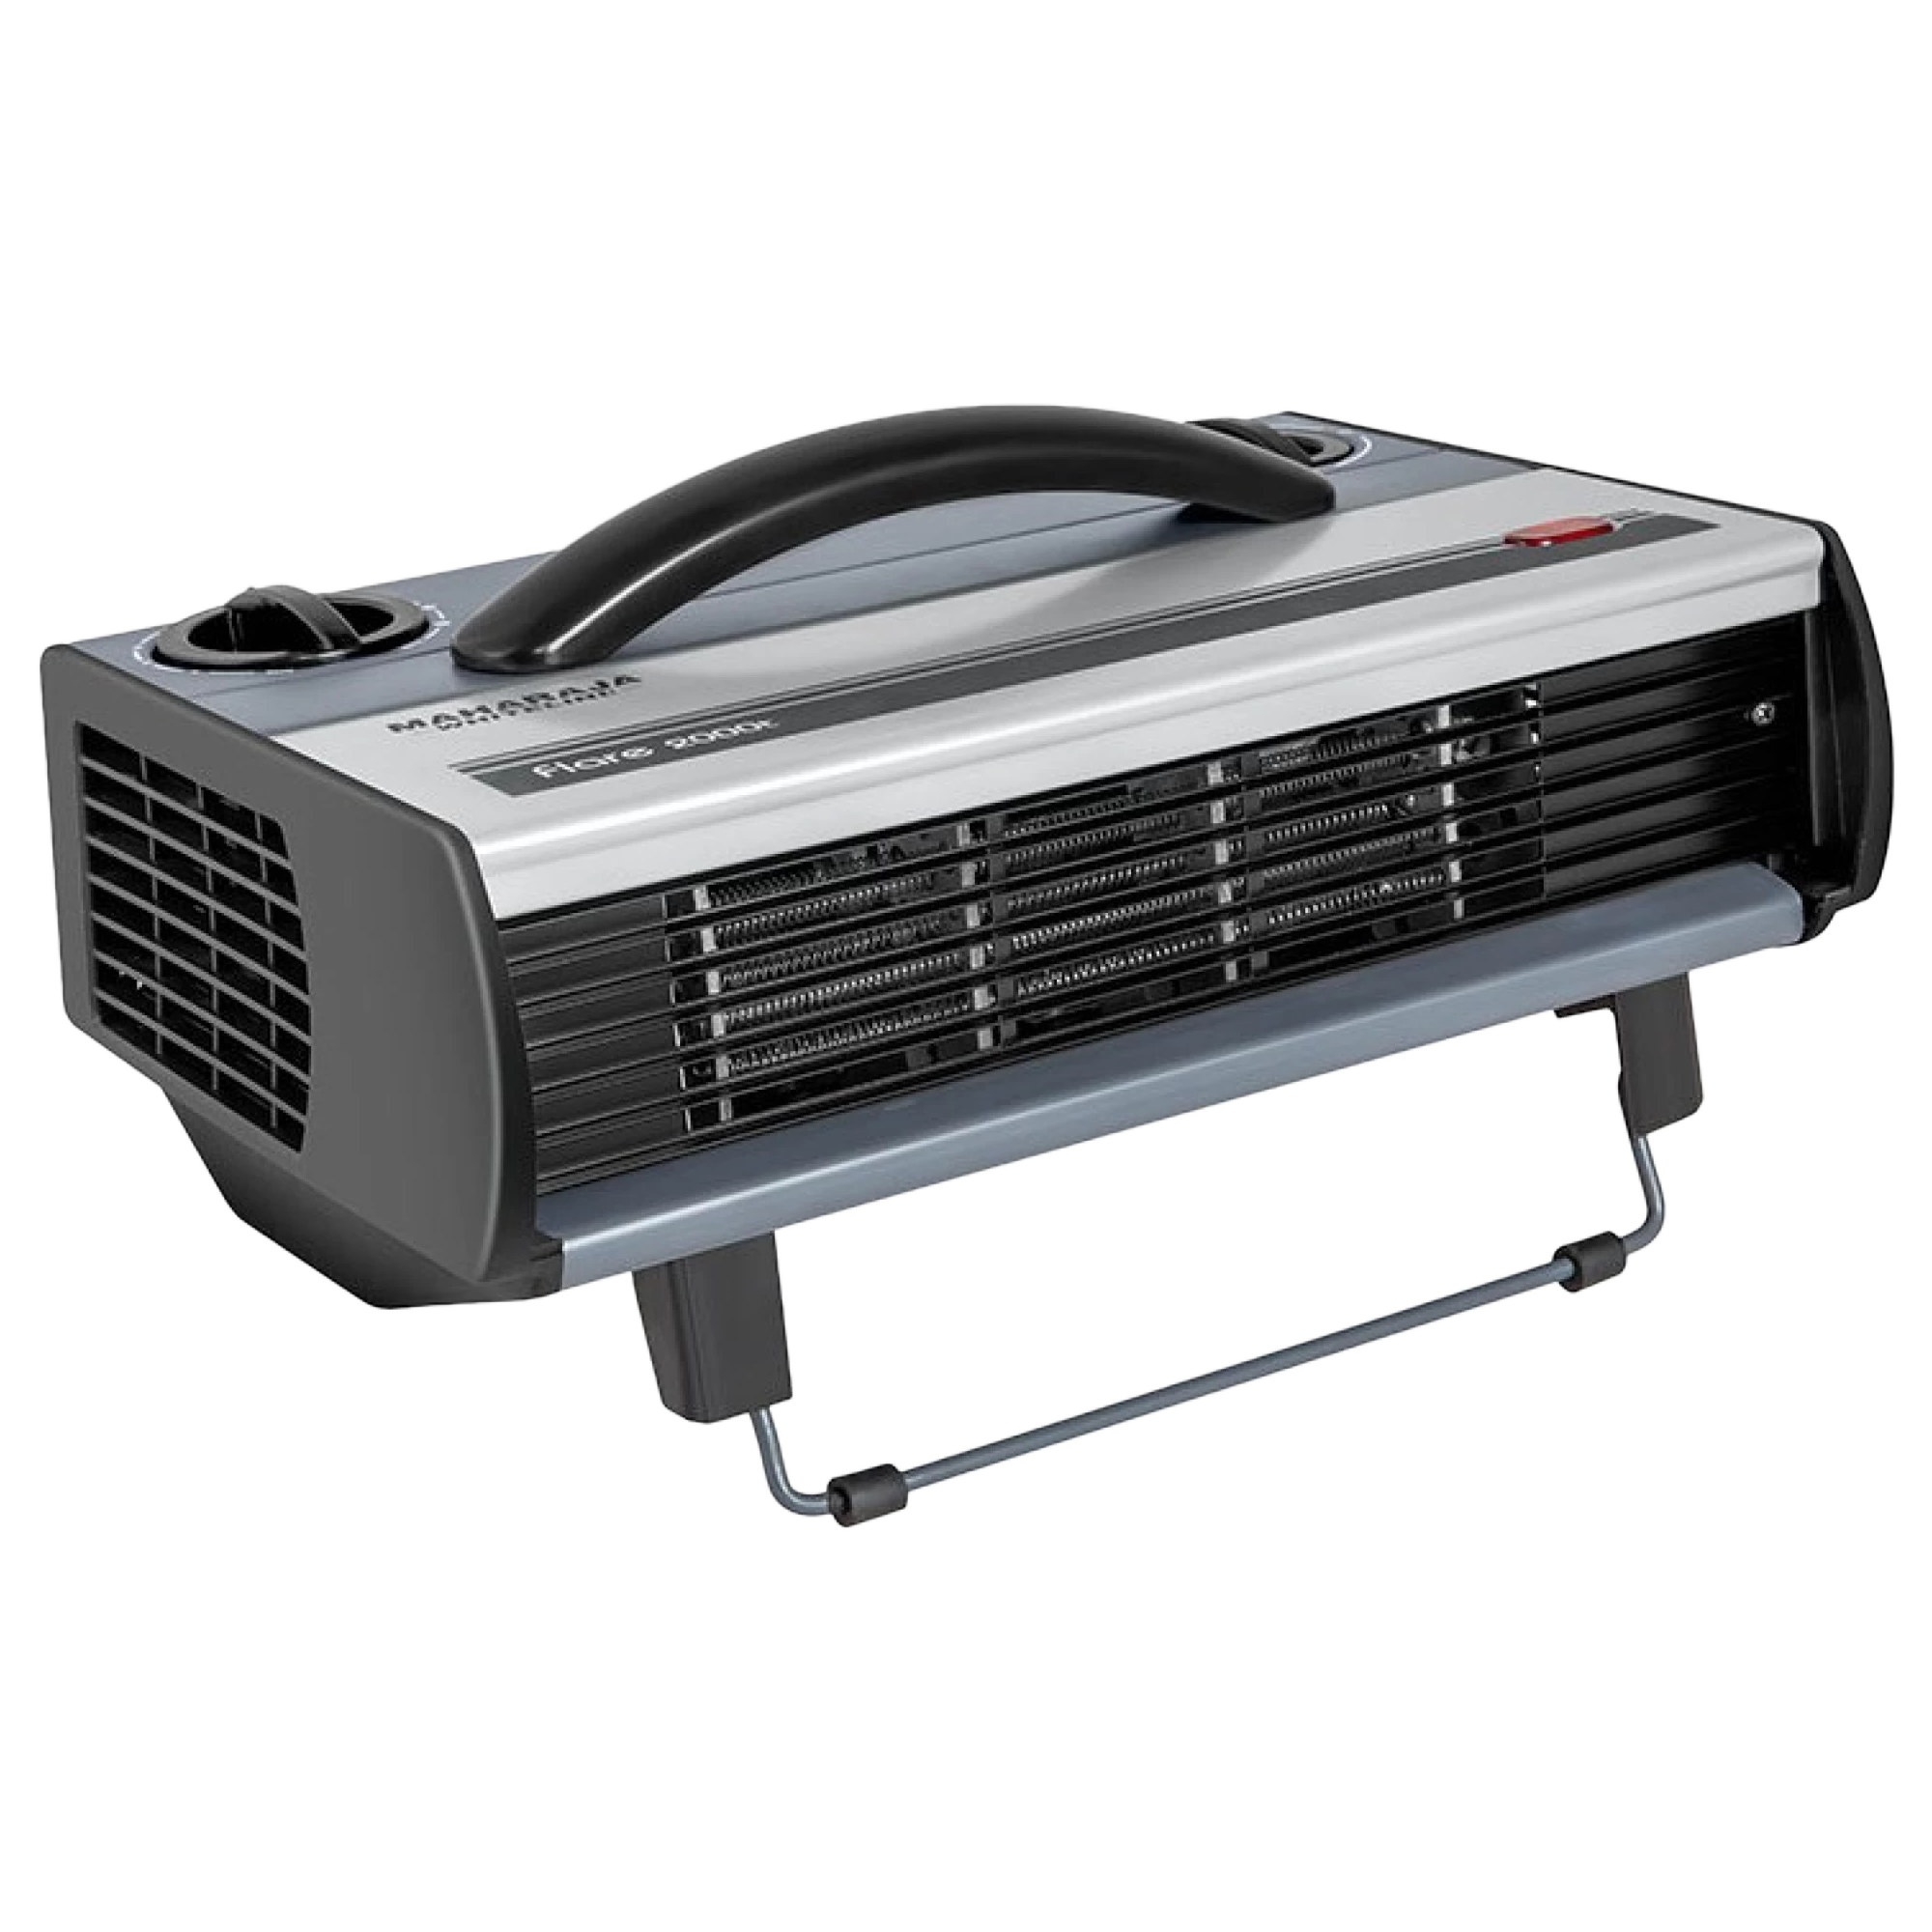 Maharaja Whiteline Flare 2000 Watts Heat Convector Halogen Room Heater (2 Fan Speed Settings, 5200000537, Black)_2